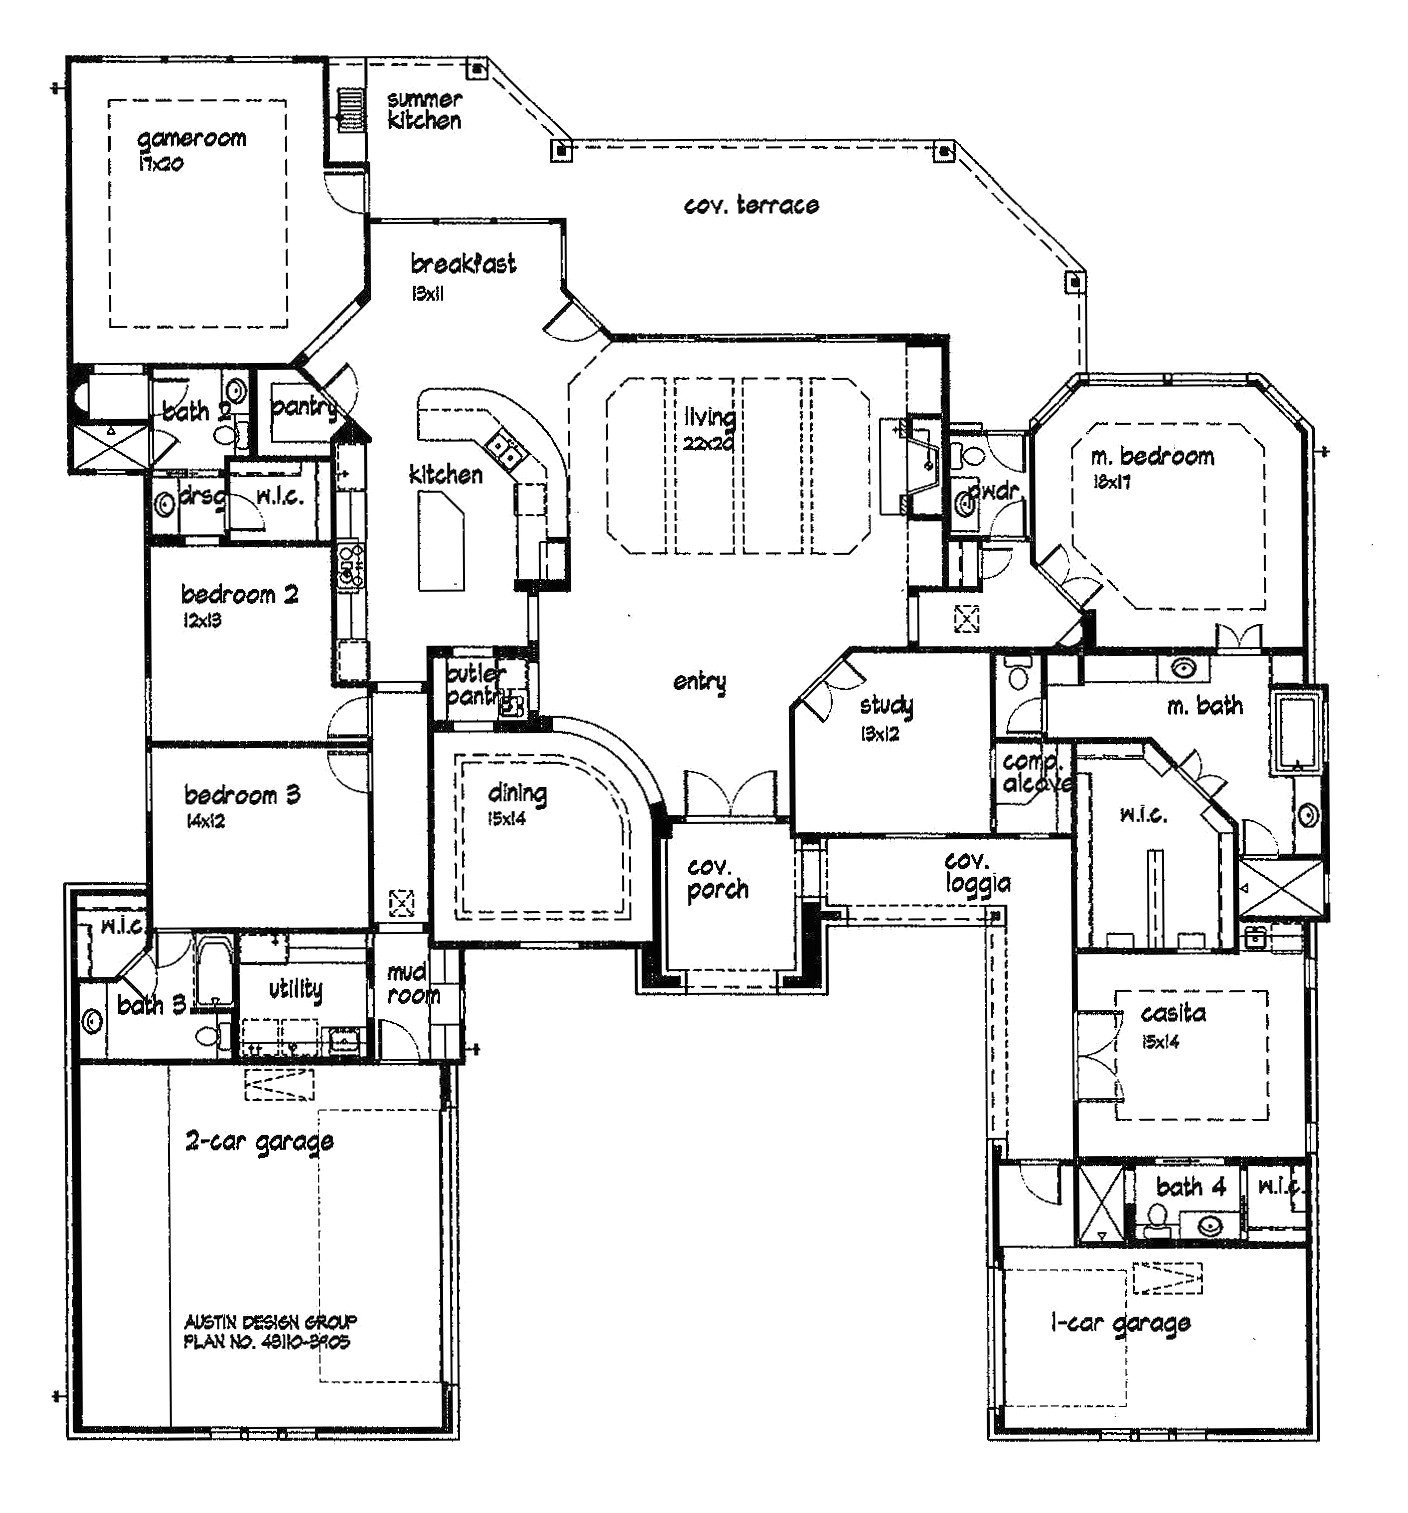 custom home floor plans new the chesapeake floor plan built by kroeker custom homes